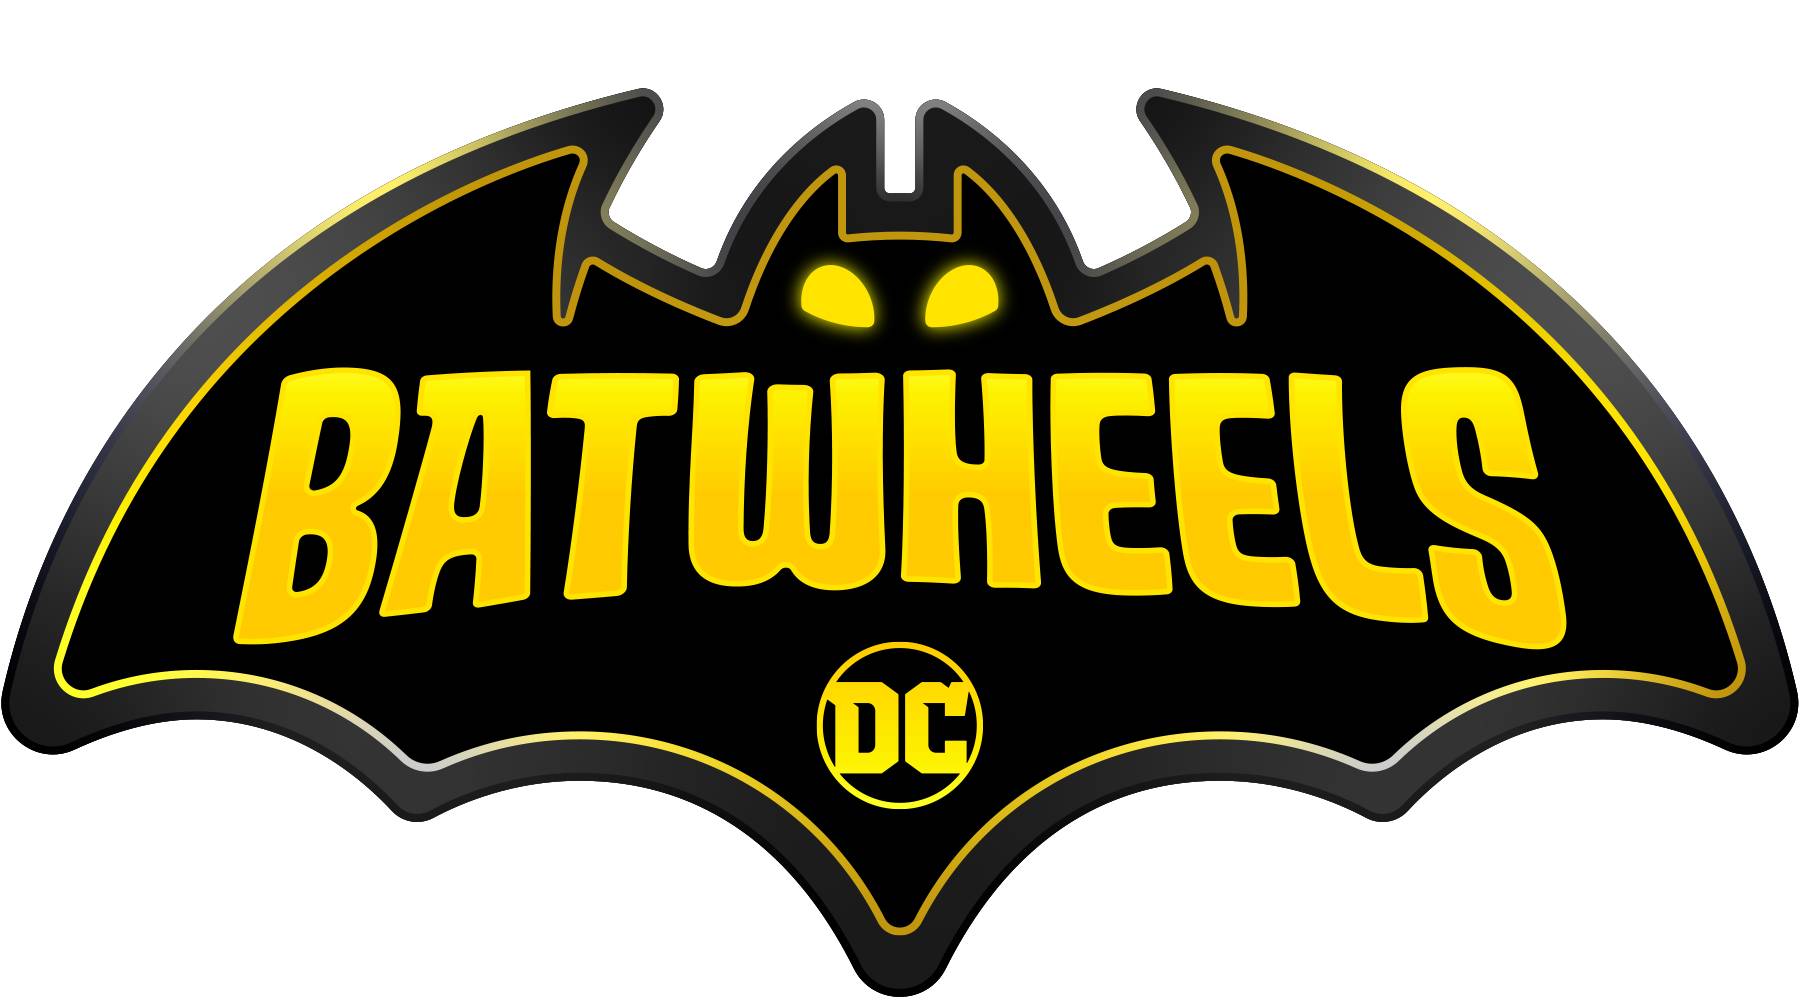 Cartoonito Hits the Gas on Season Two Renewal of Preschool Series  “Batwheels” for Cartoon Network and HBO Max | Warner Bros. Discovery